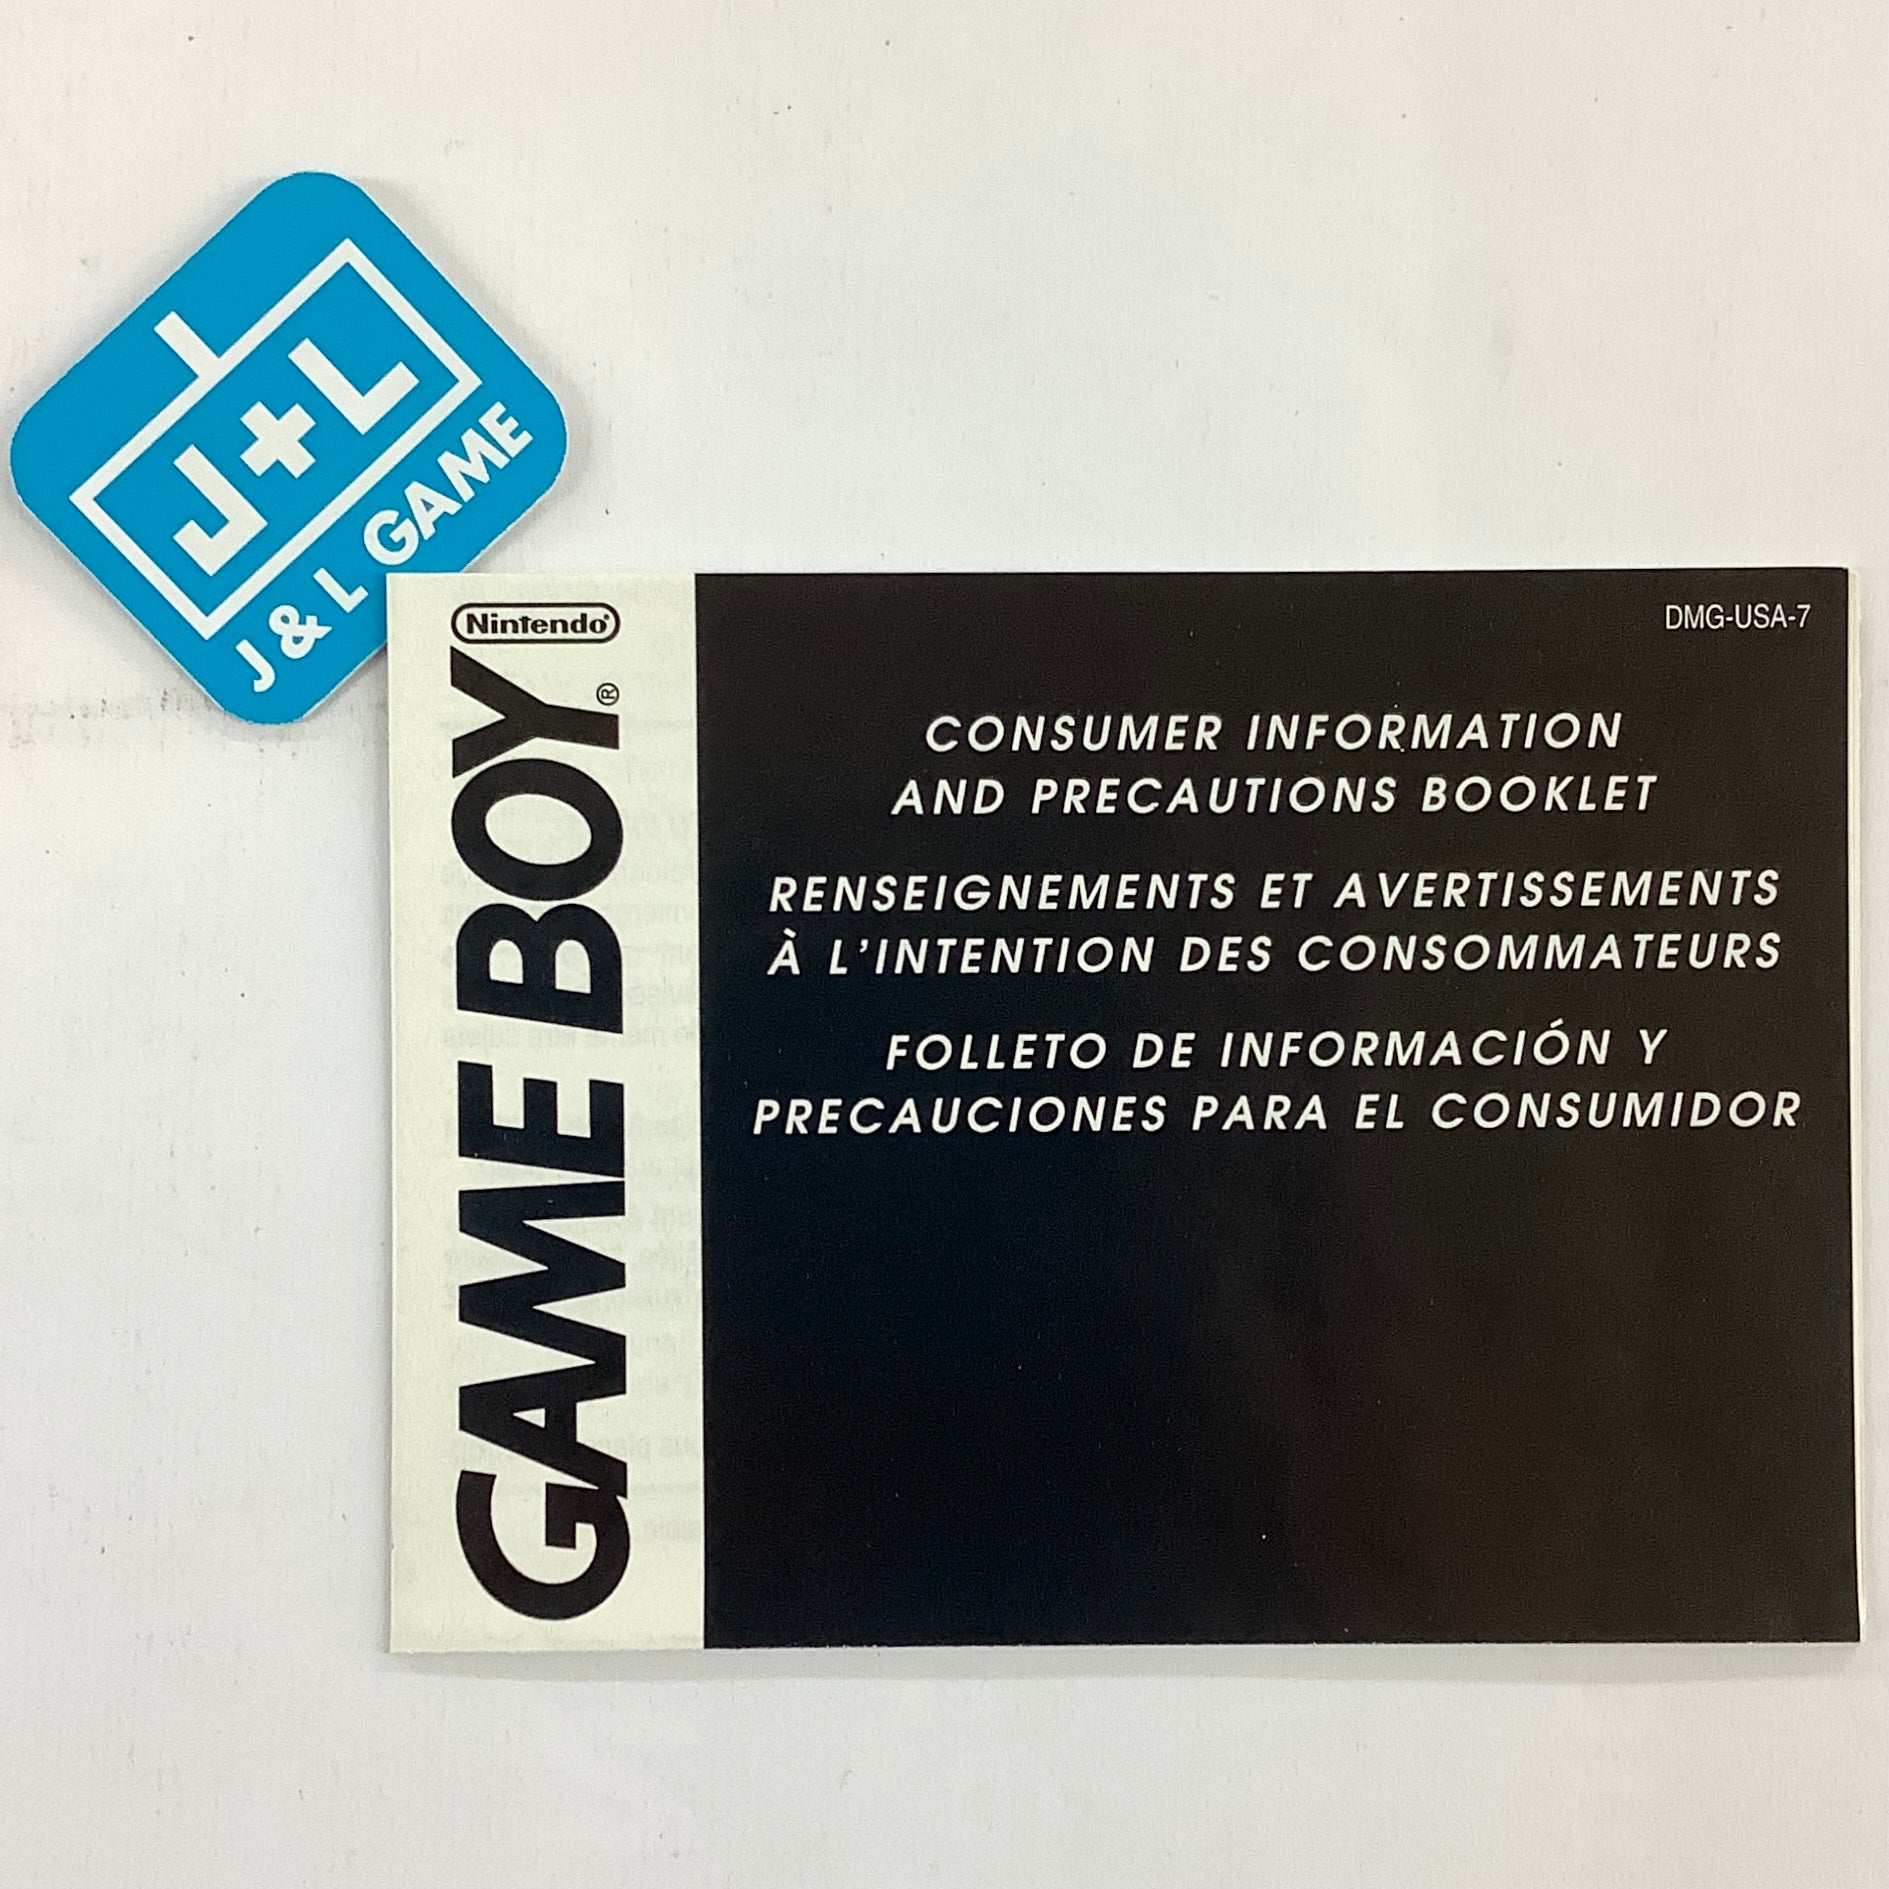 Klustar - (GBC) Game Boy Color [Pre-Owned] Video Games Infogrames   